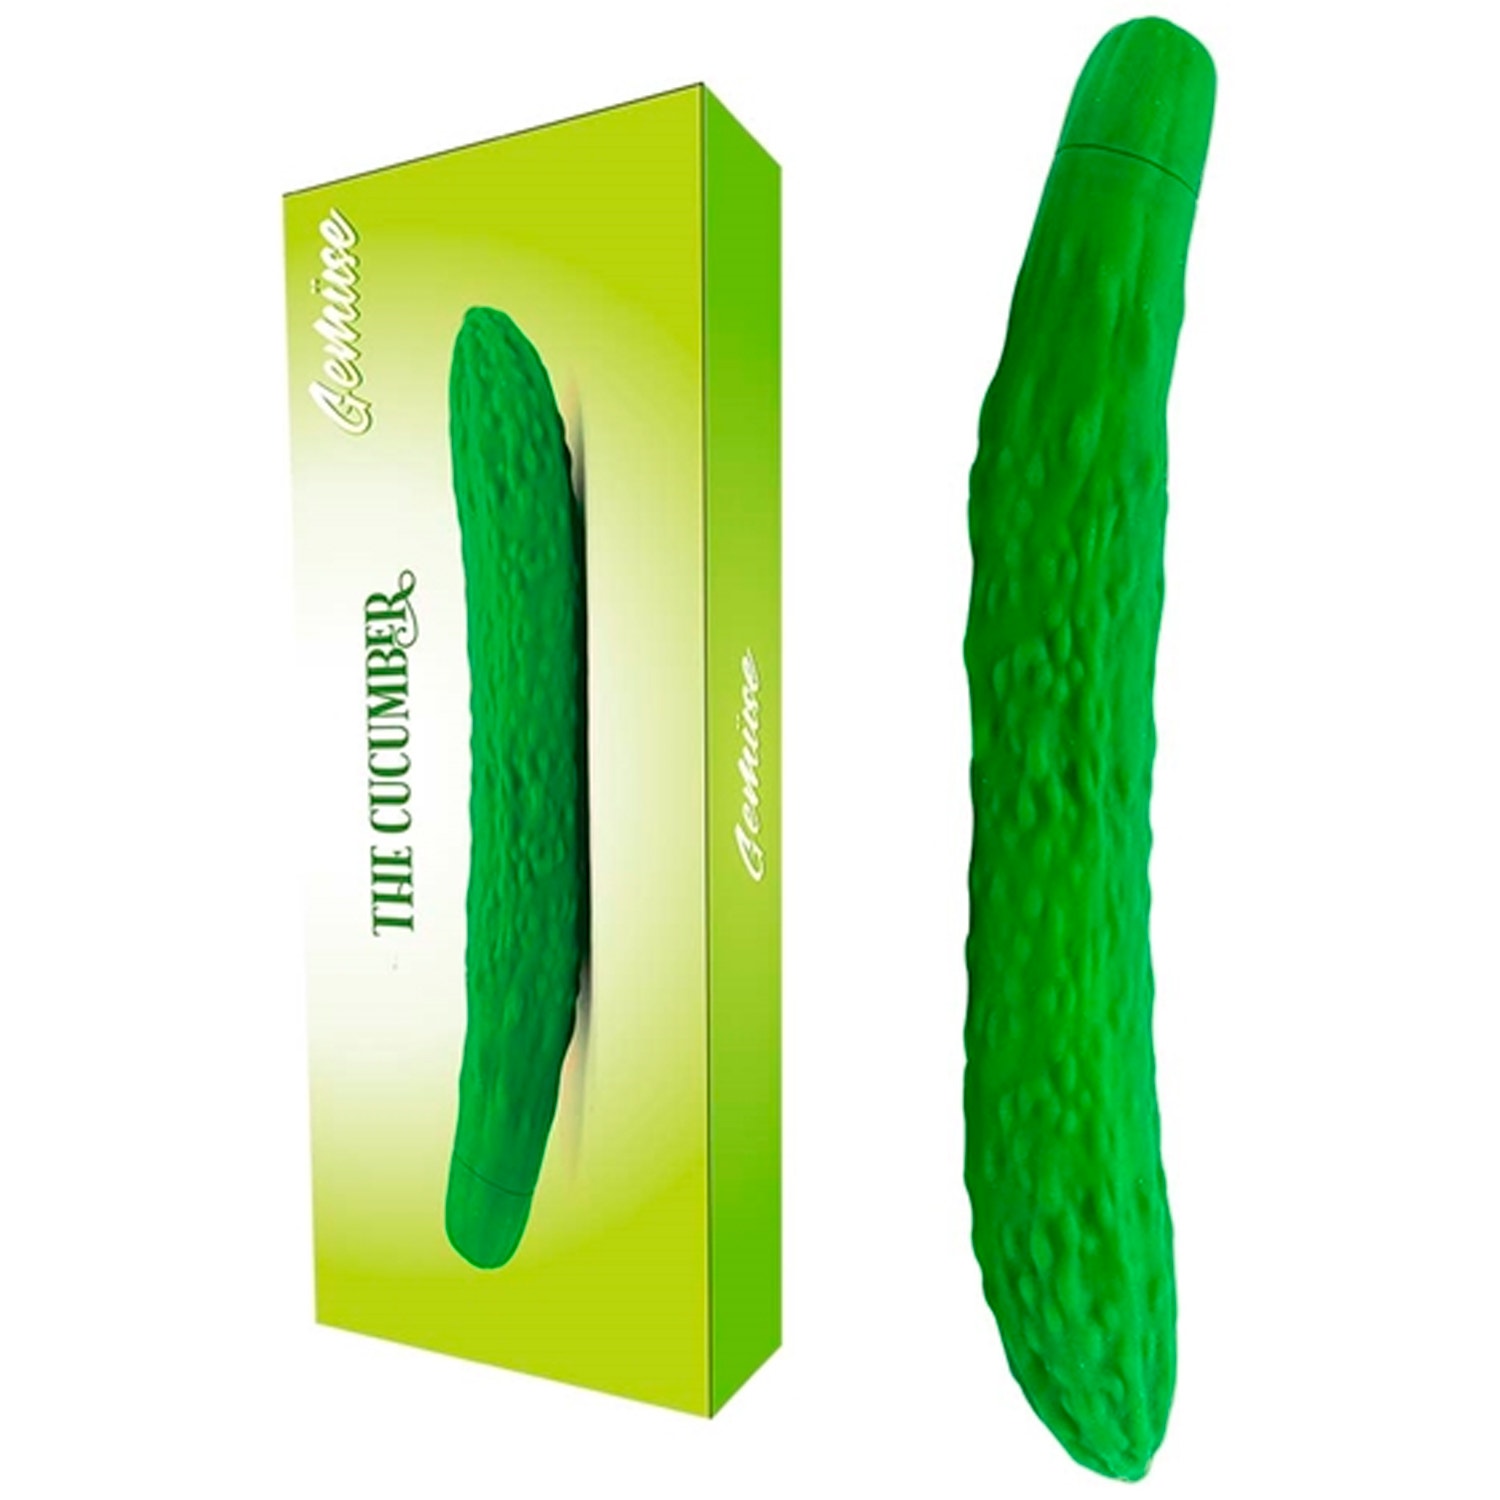 arezoo karami recommends Using A Cucumber As A Dildo